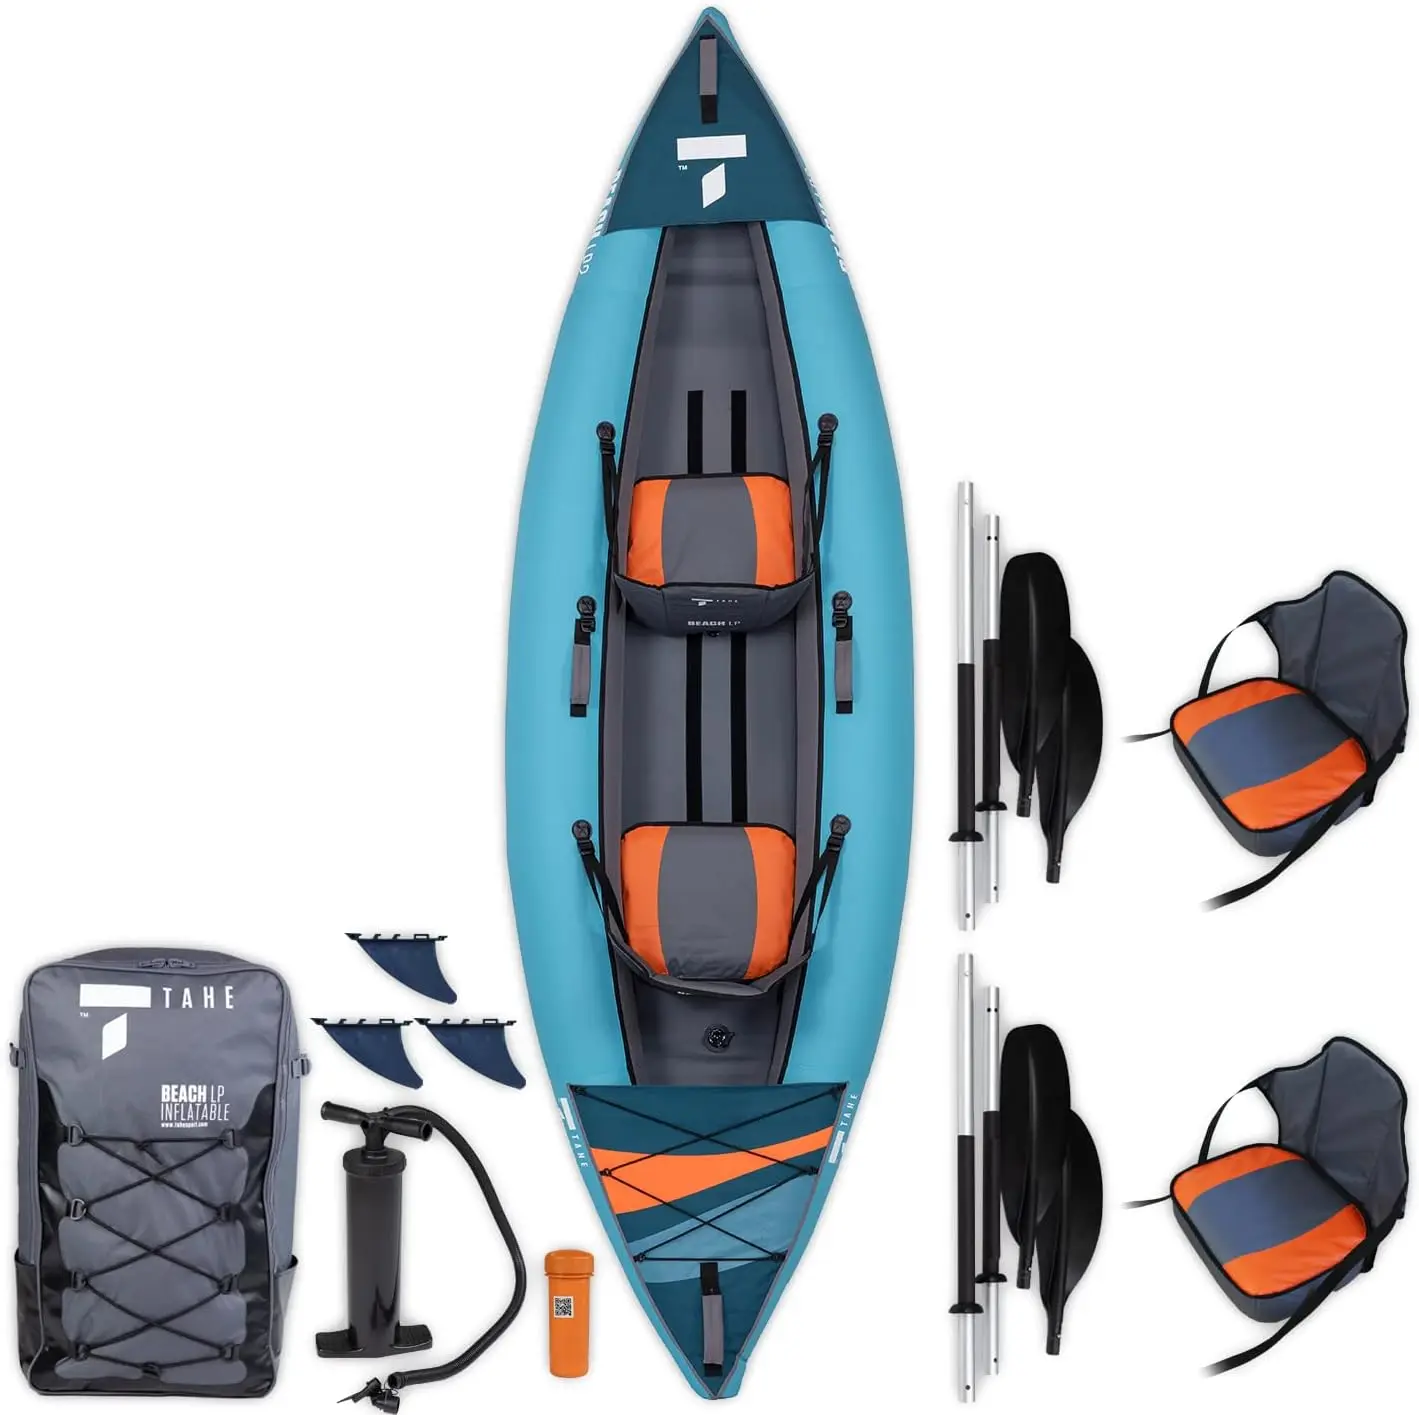 

LP Premium Inflatable Kayak Complete Package Including Kayak, Seat, Paddle, and Travel/Storage Bag